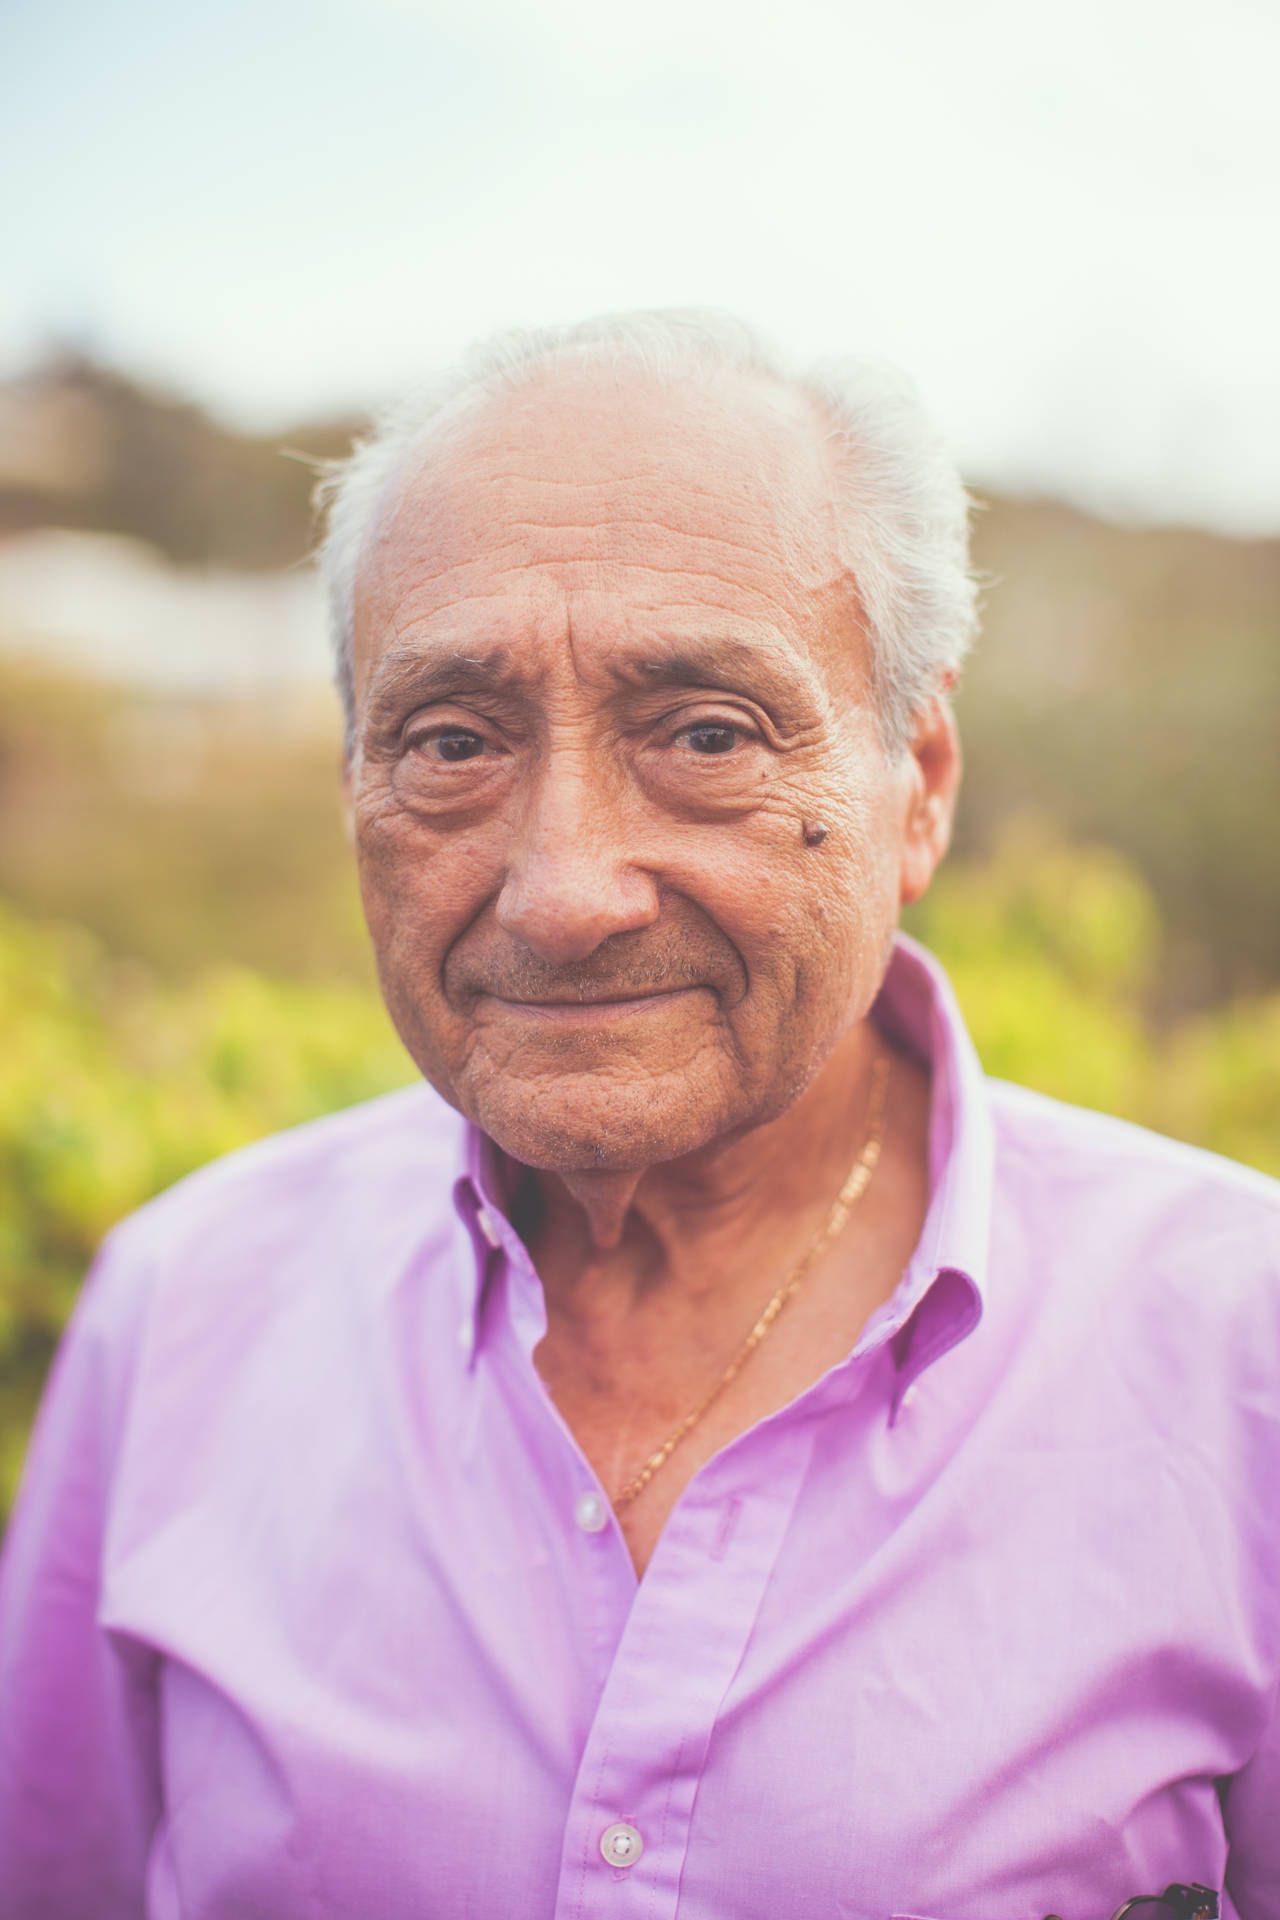 Old Man In Purple Shirt Portrait Background